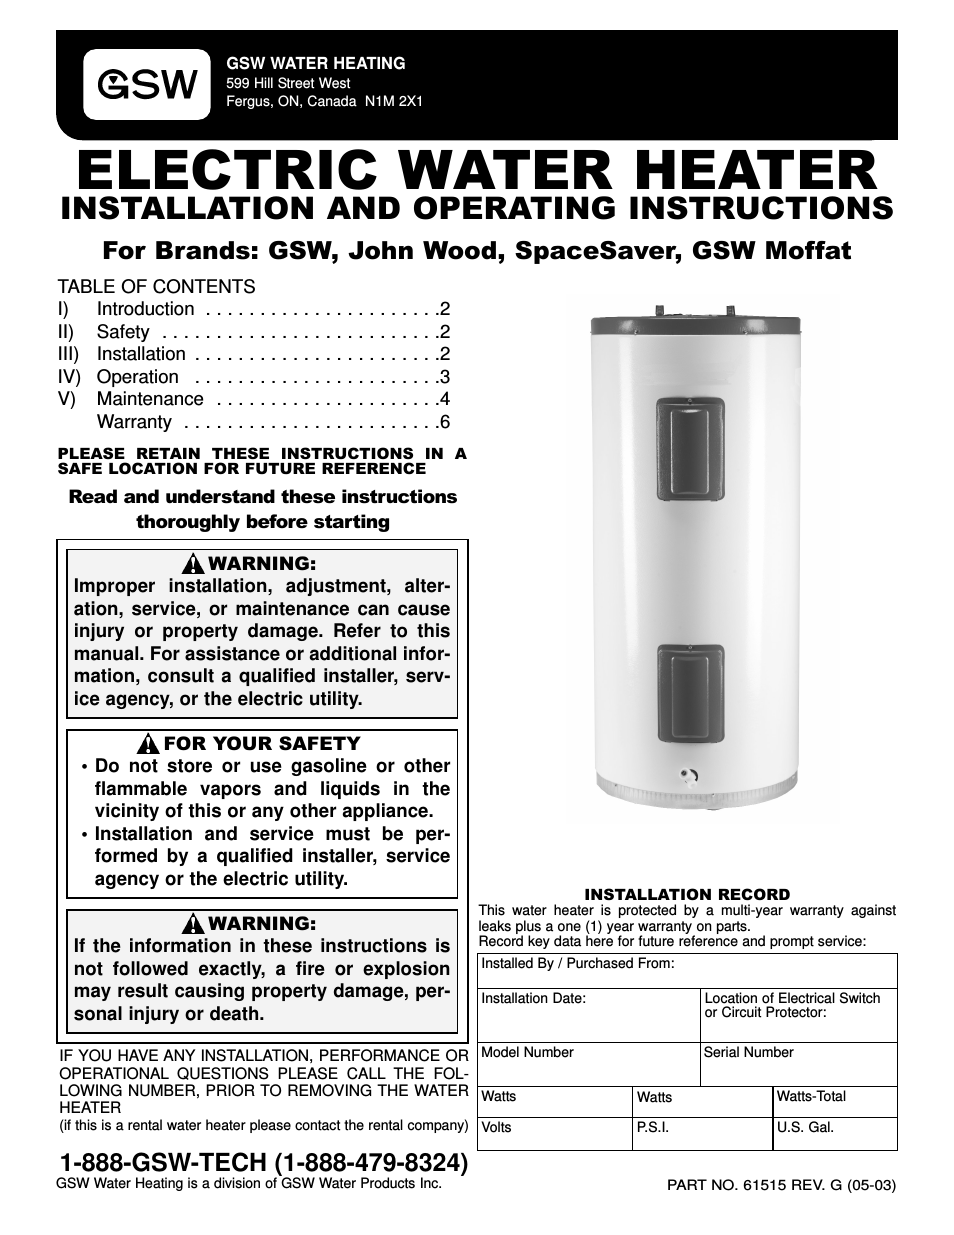 Electric Water Heater P/N 61515 REV. G (05-03)